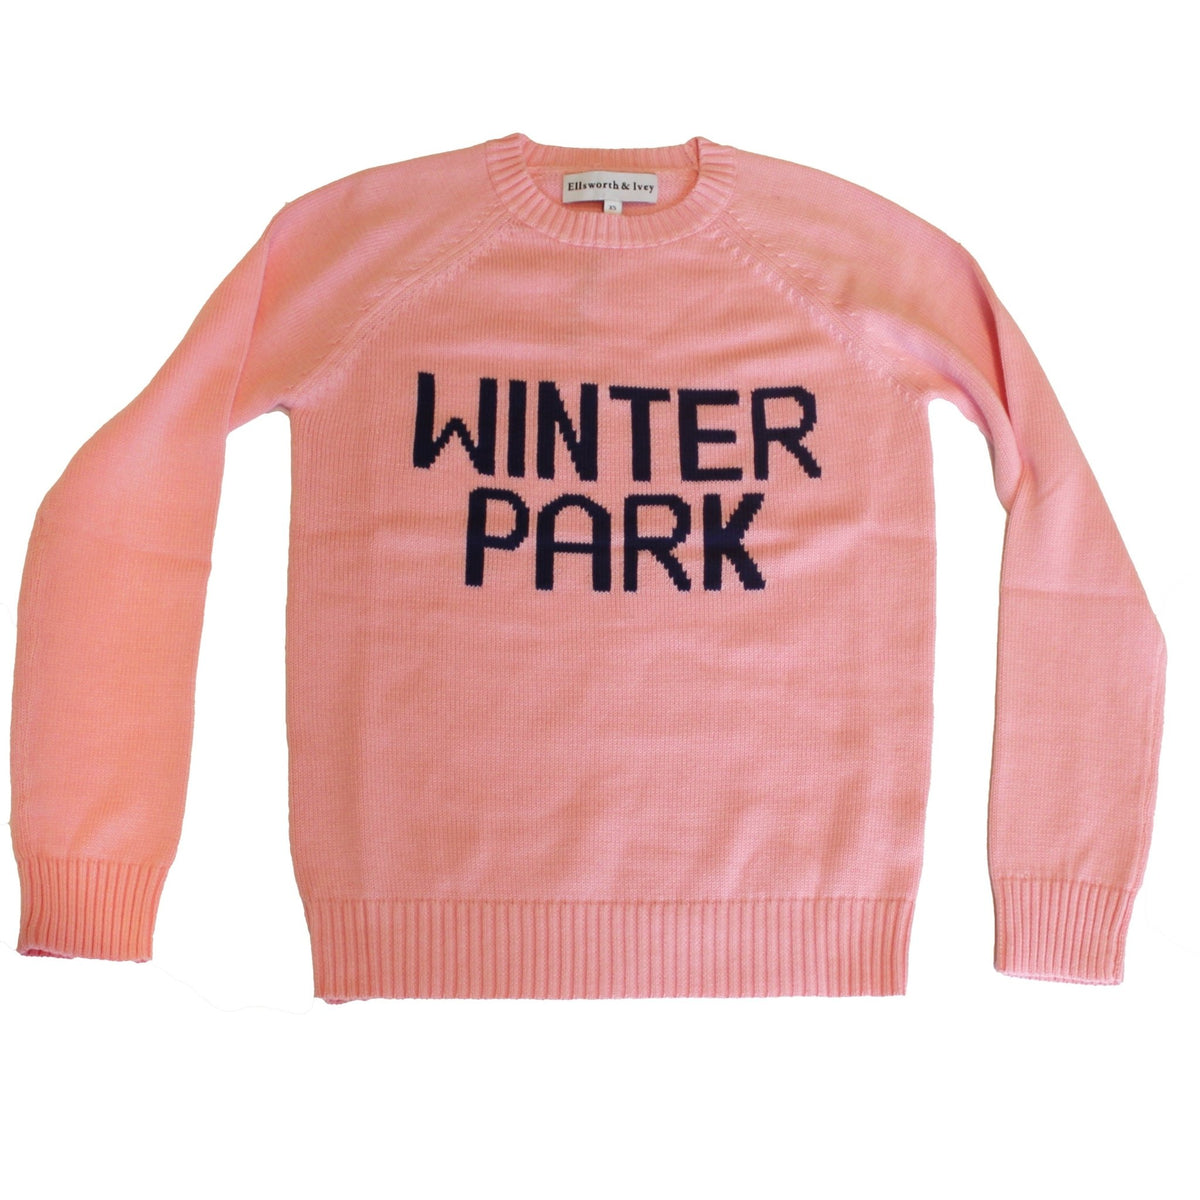 Winter Park Sweater - The Grove